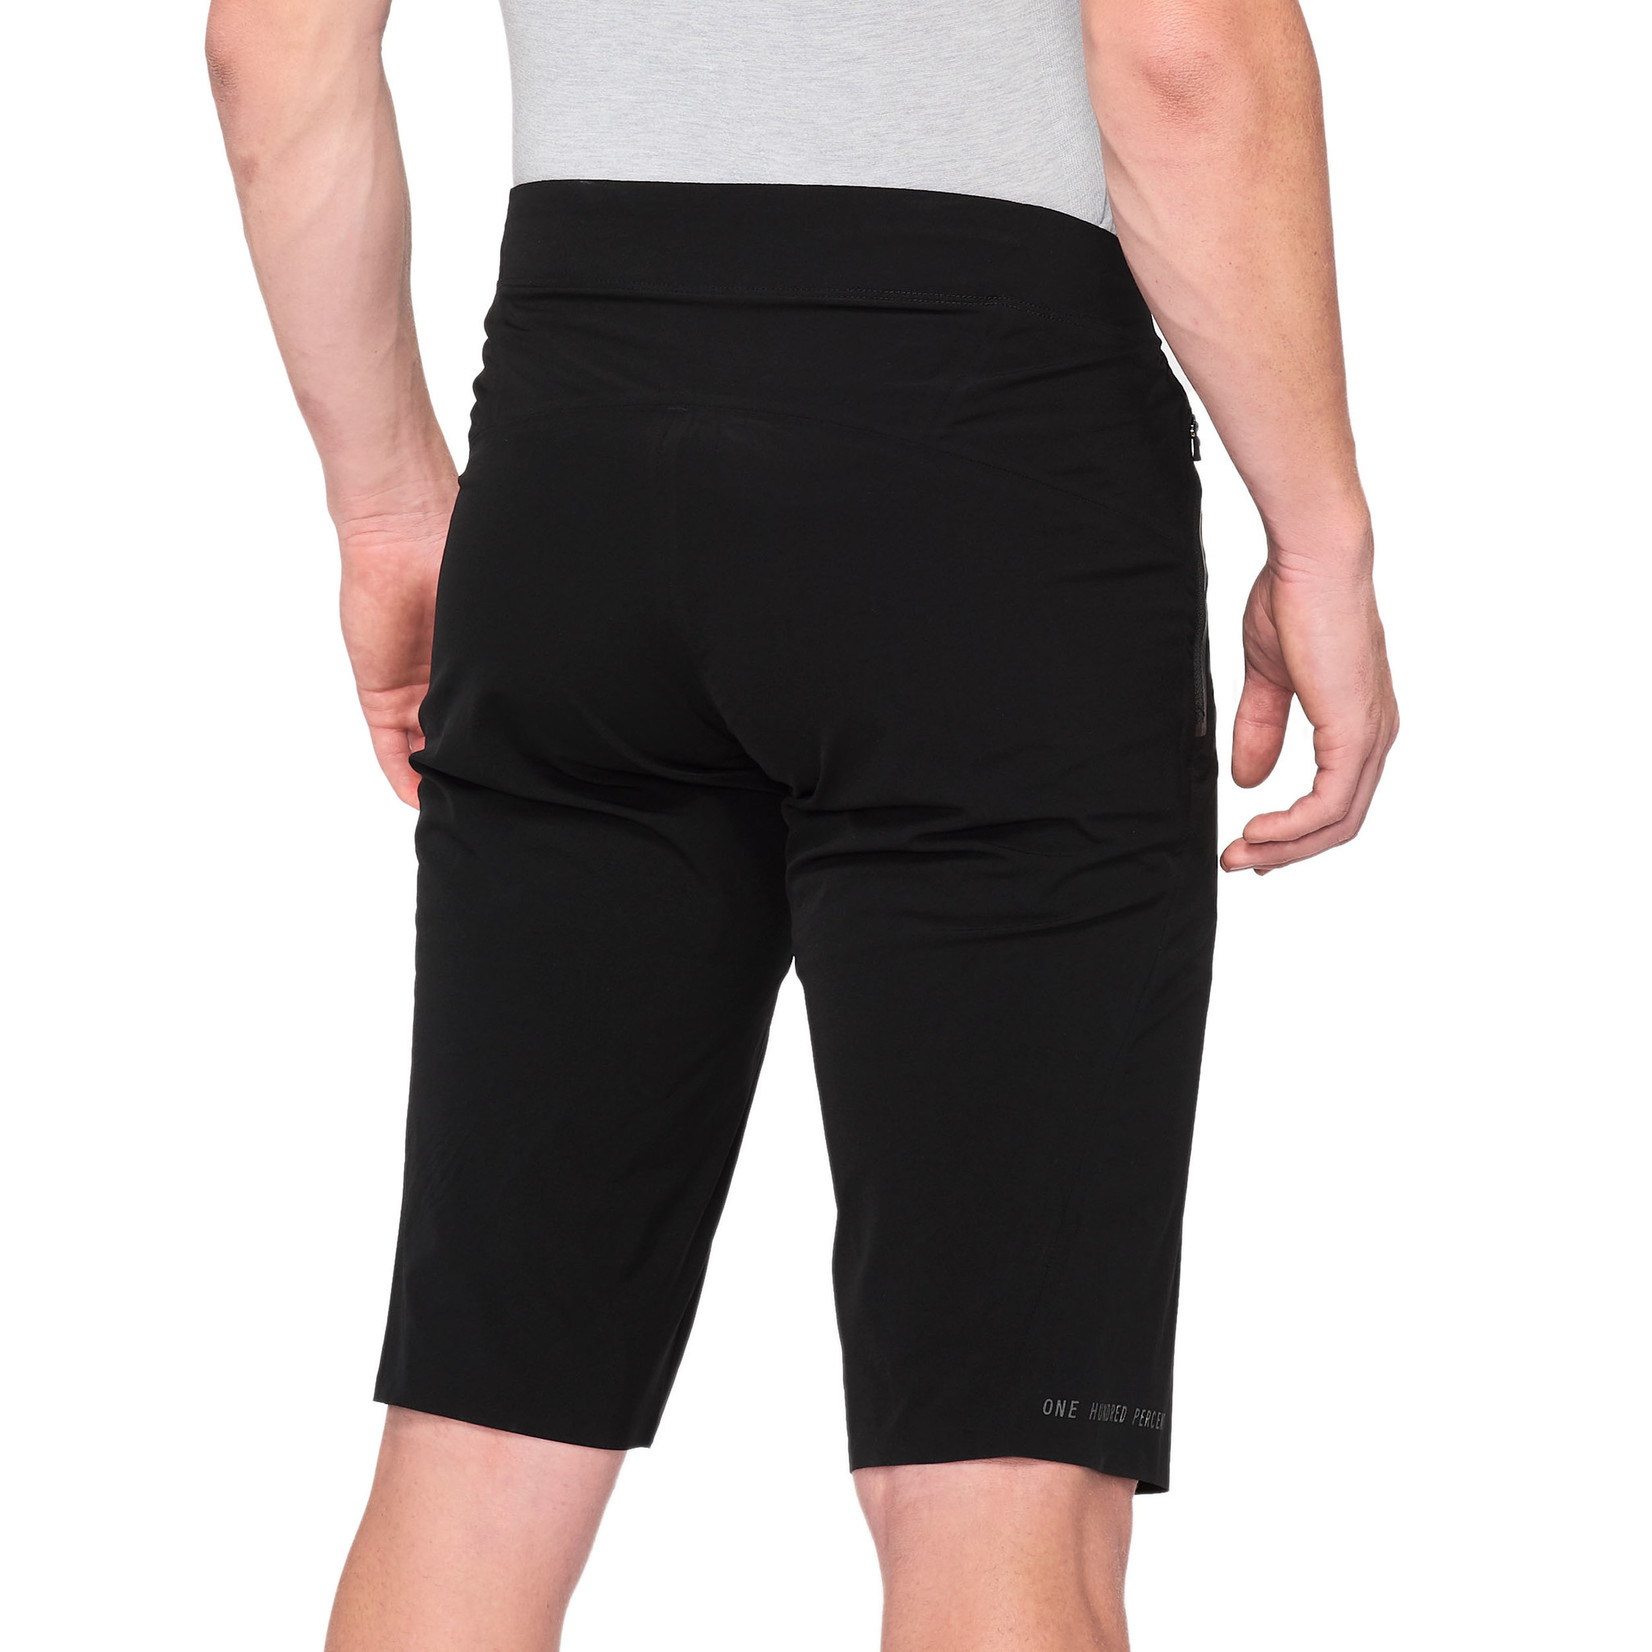 100% Celium Bike Gear Men's Shorts - Black